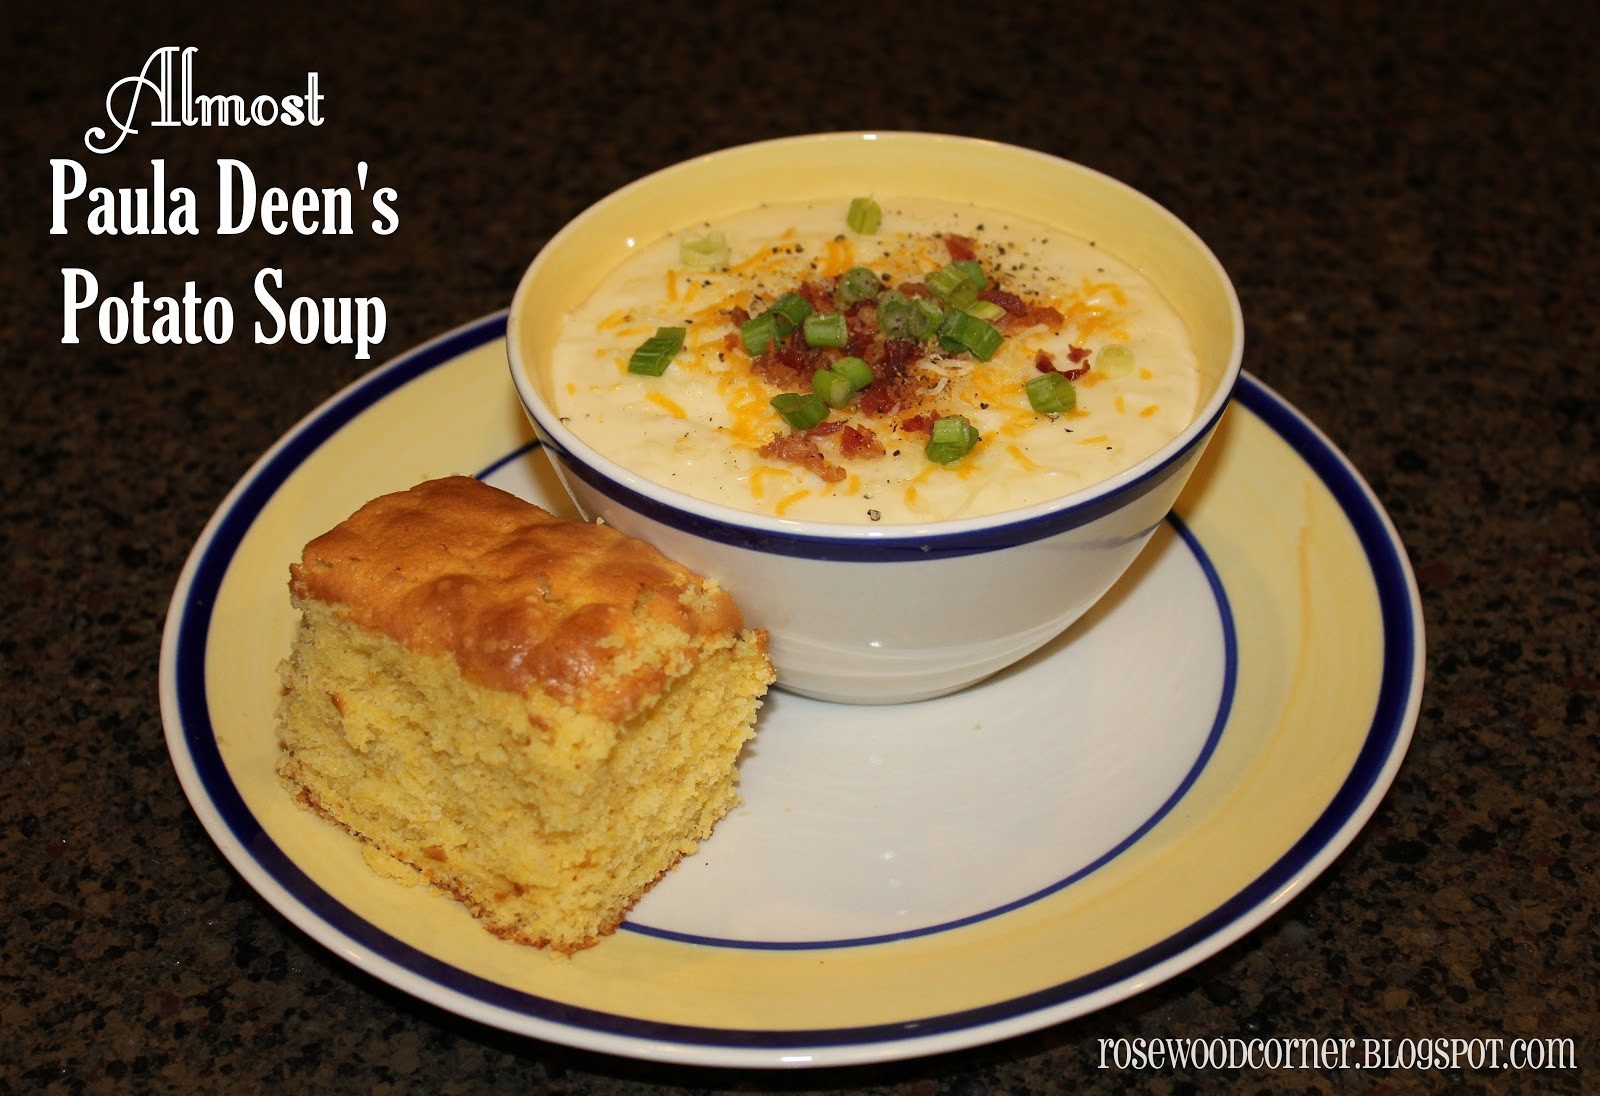 Paula Deen Hash Brown Potato Soup
 Rosewood Corner Recipes We Love "Almost" Paula Deen s